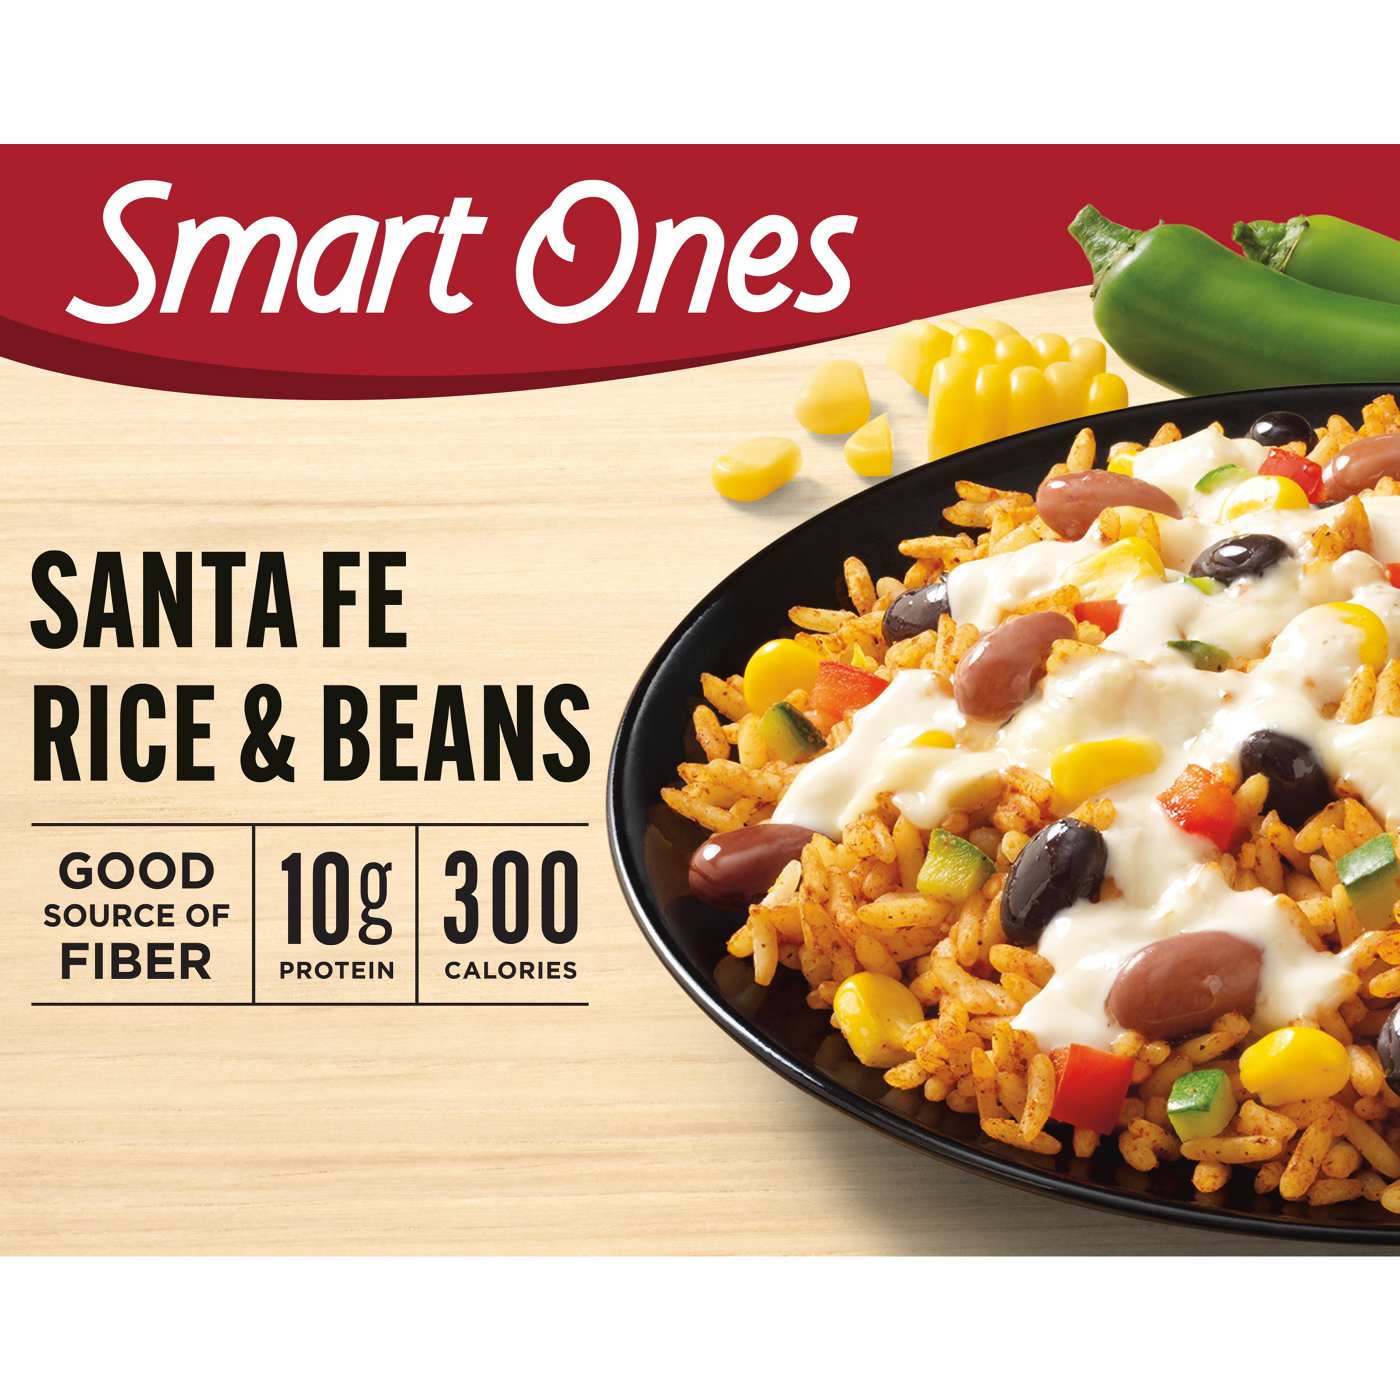 Smart Ones Santa Fe Rice & Beans Frozen Meal; image 1 of 2